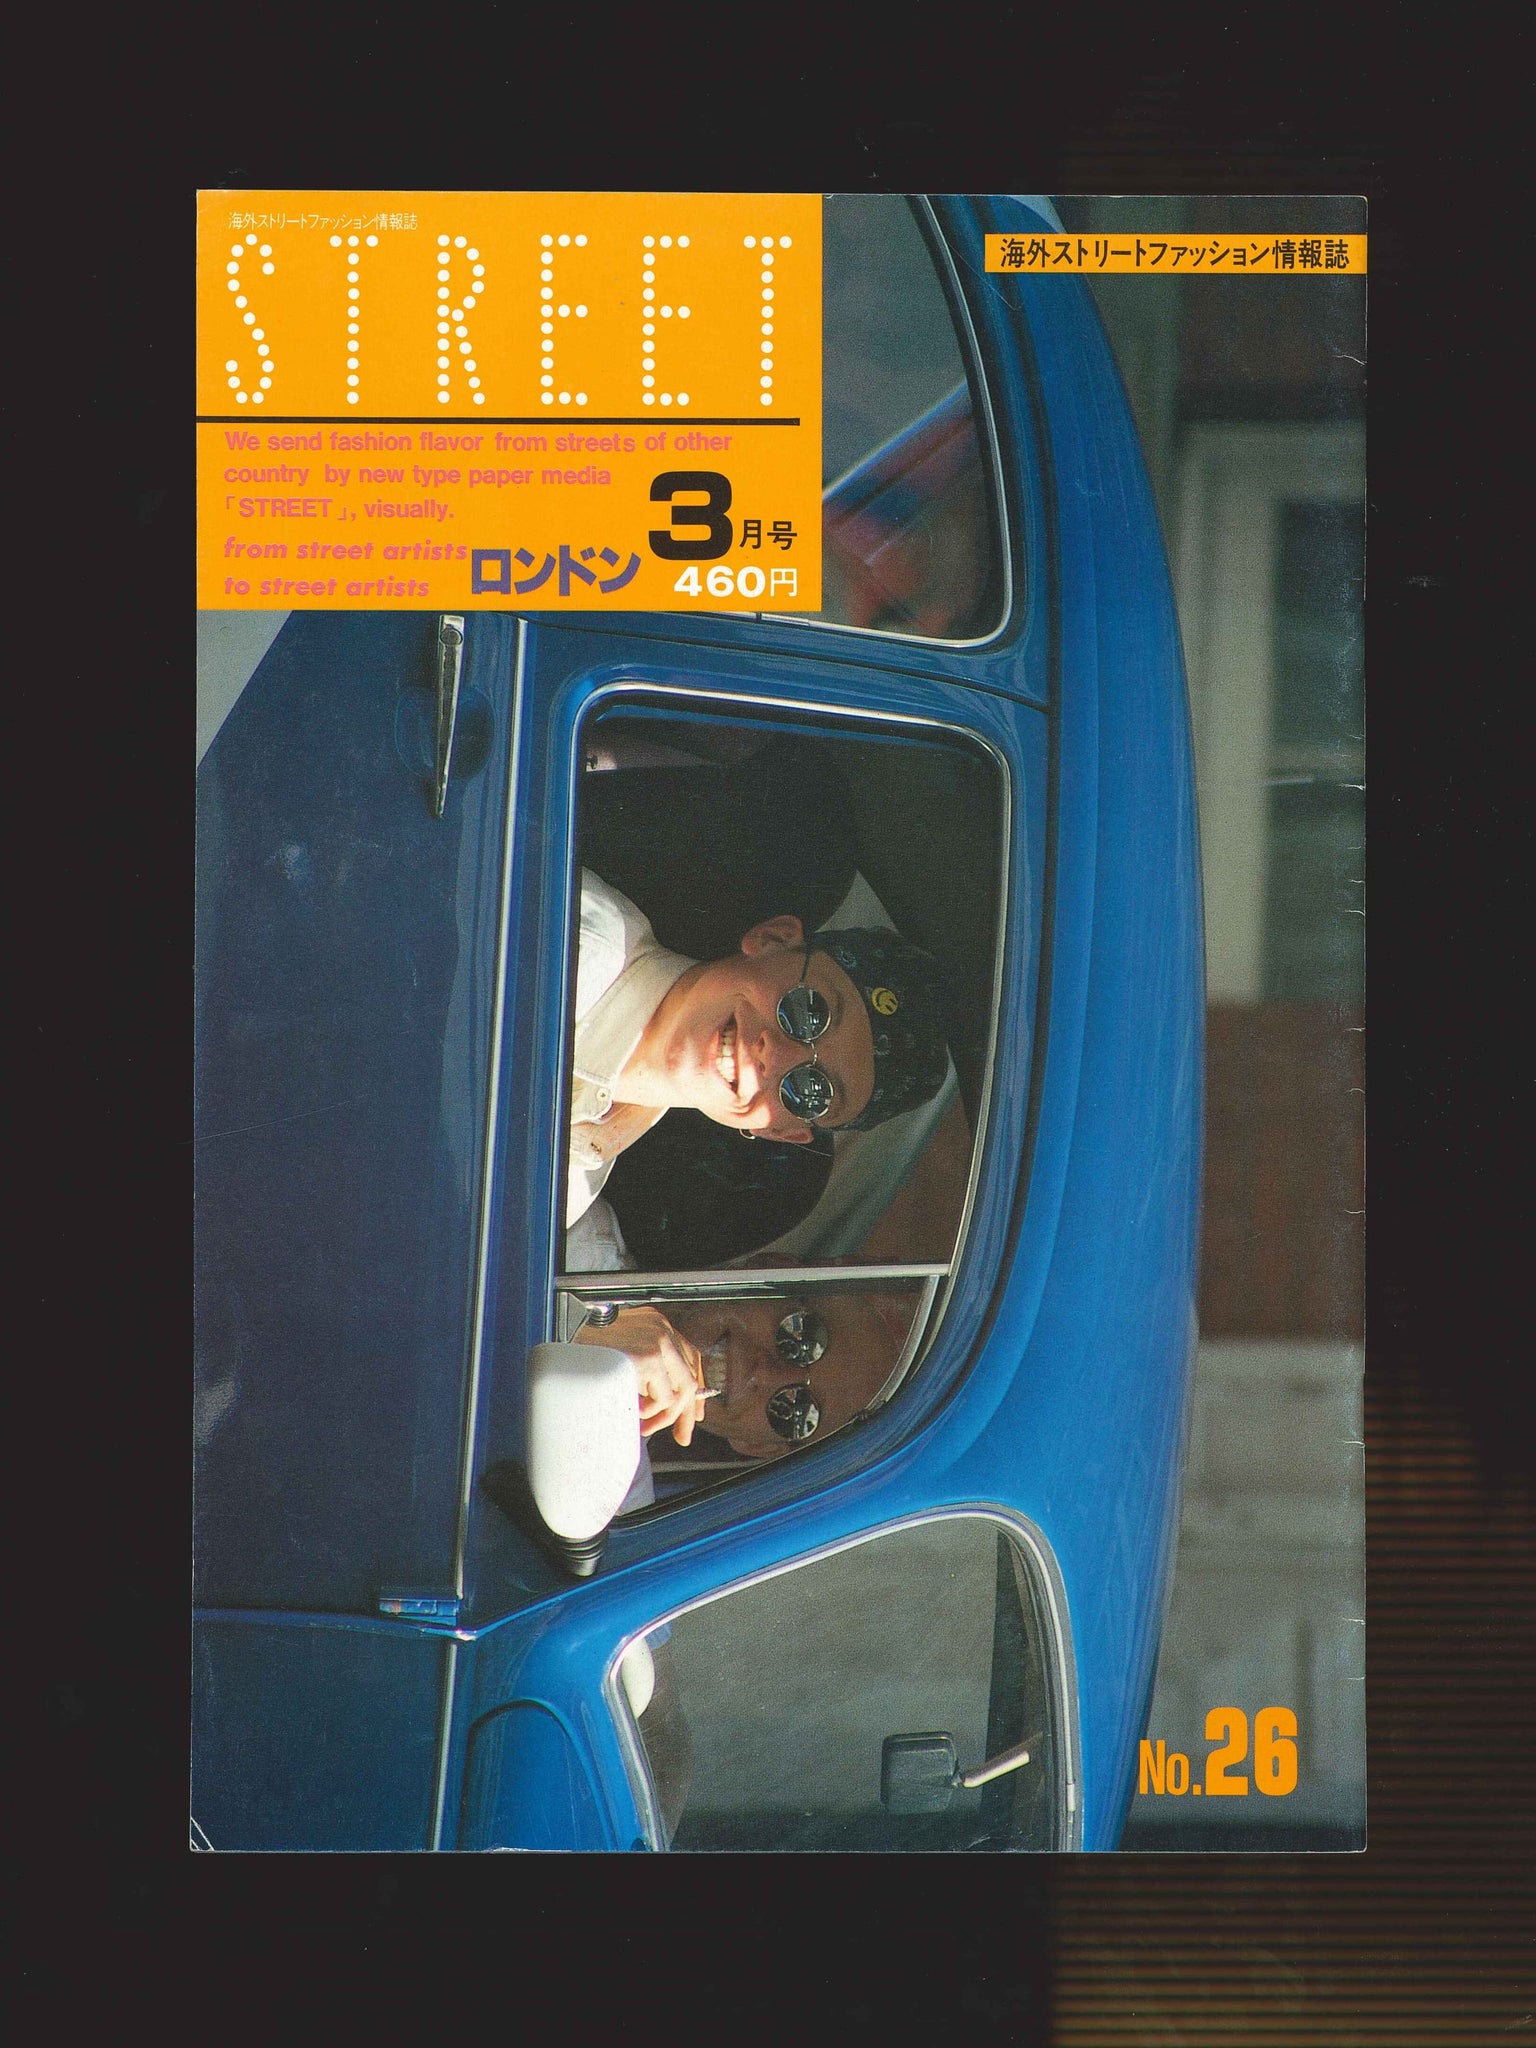 STREET magazine no. 26 / march 1990 / street fashion in london / Shoichi Aoki